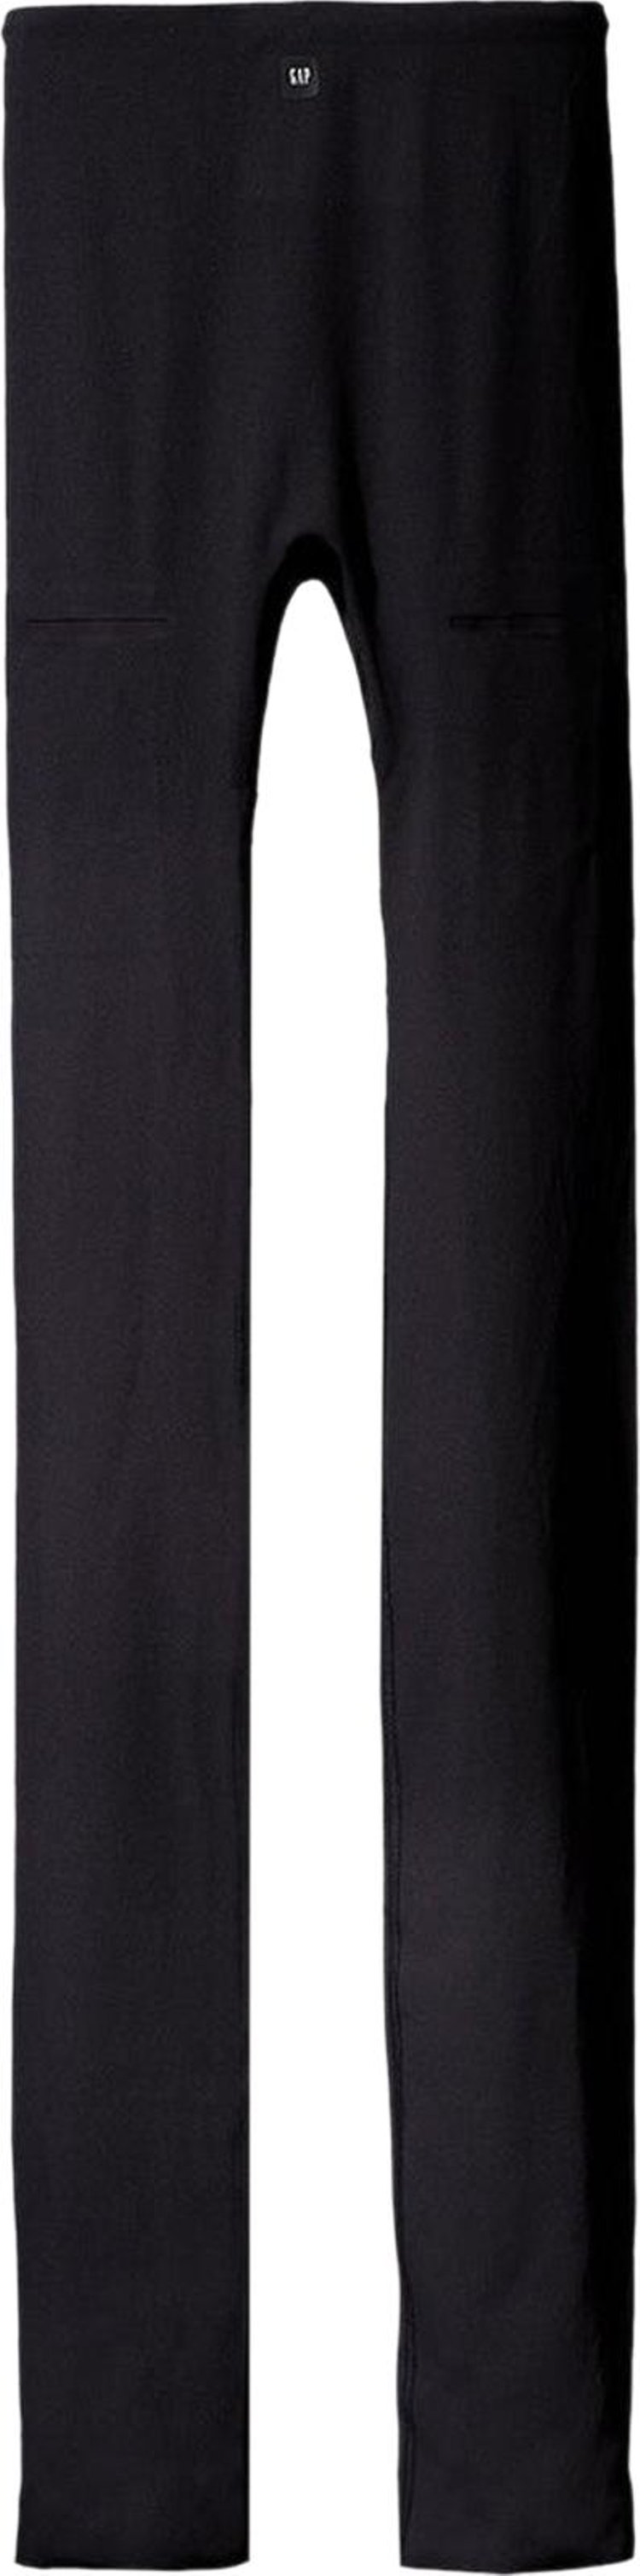 Buy Yeezy Gap Engineered by Balenciaga Long Legging 'Black